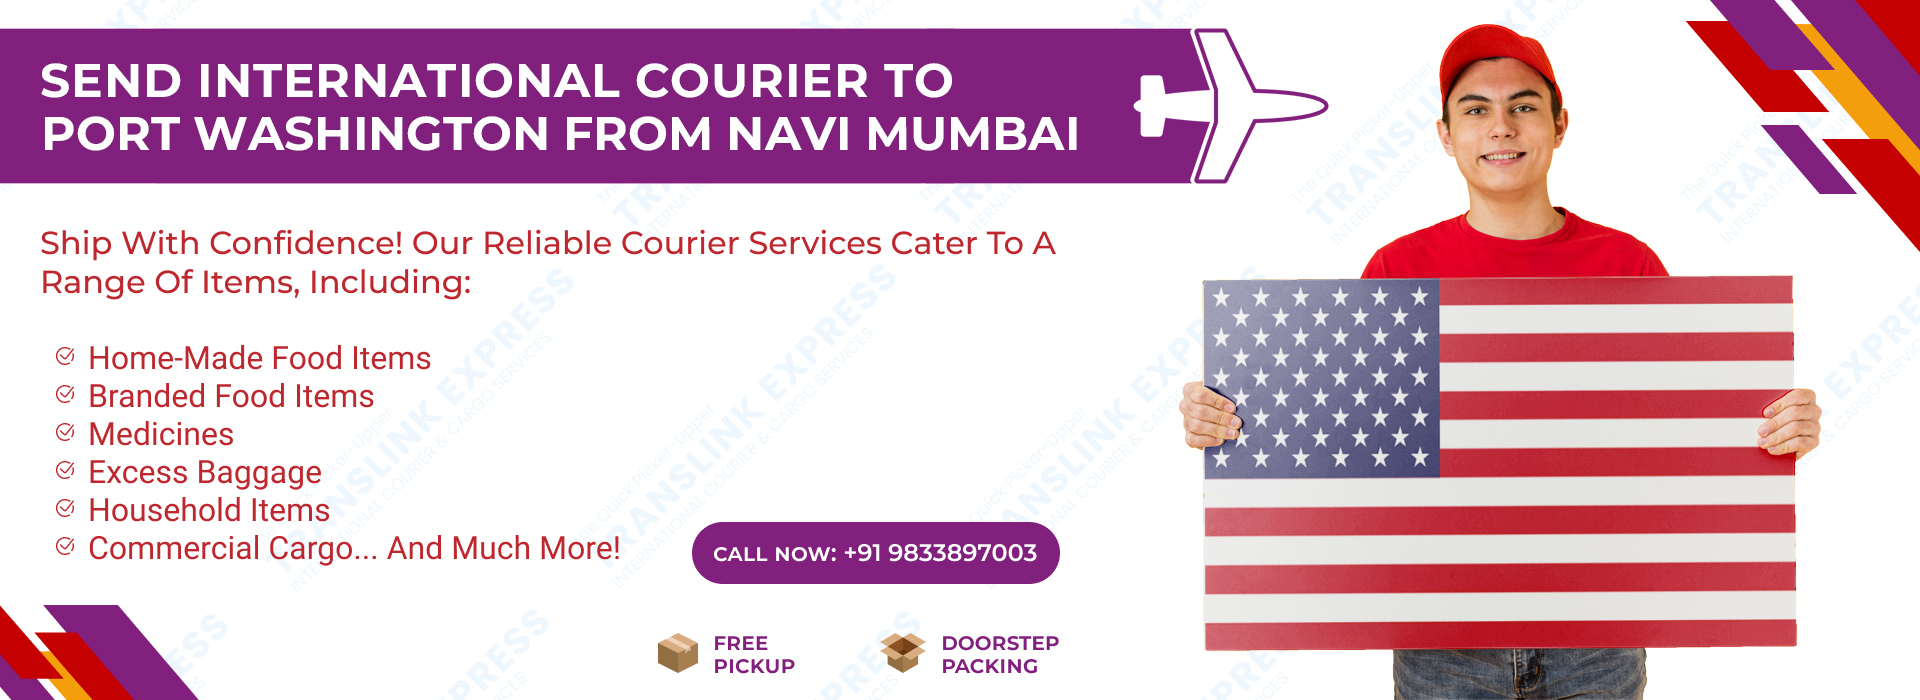 Courier to Port Washington From Navi Mumbai